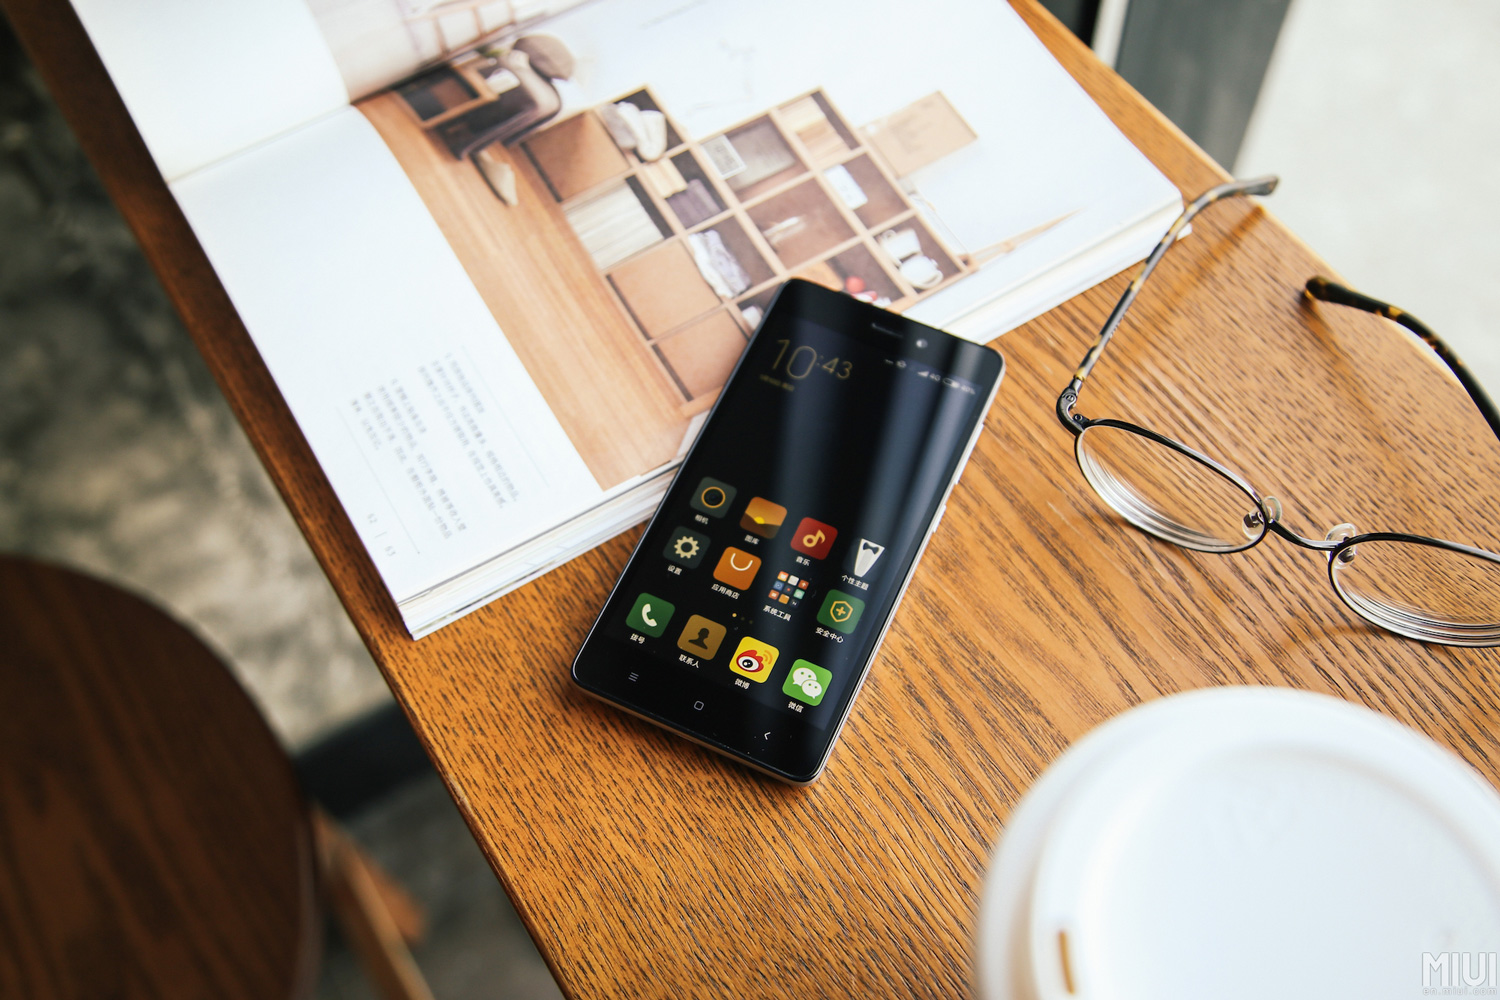 xiaomi redmi 3 news android smartphone 100 2 4